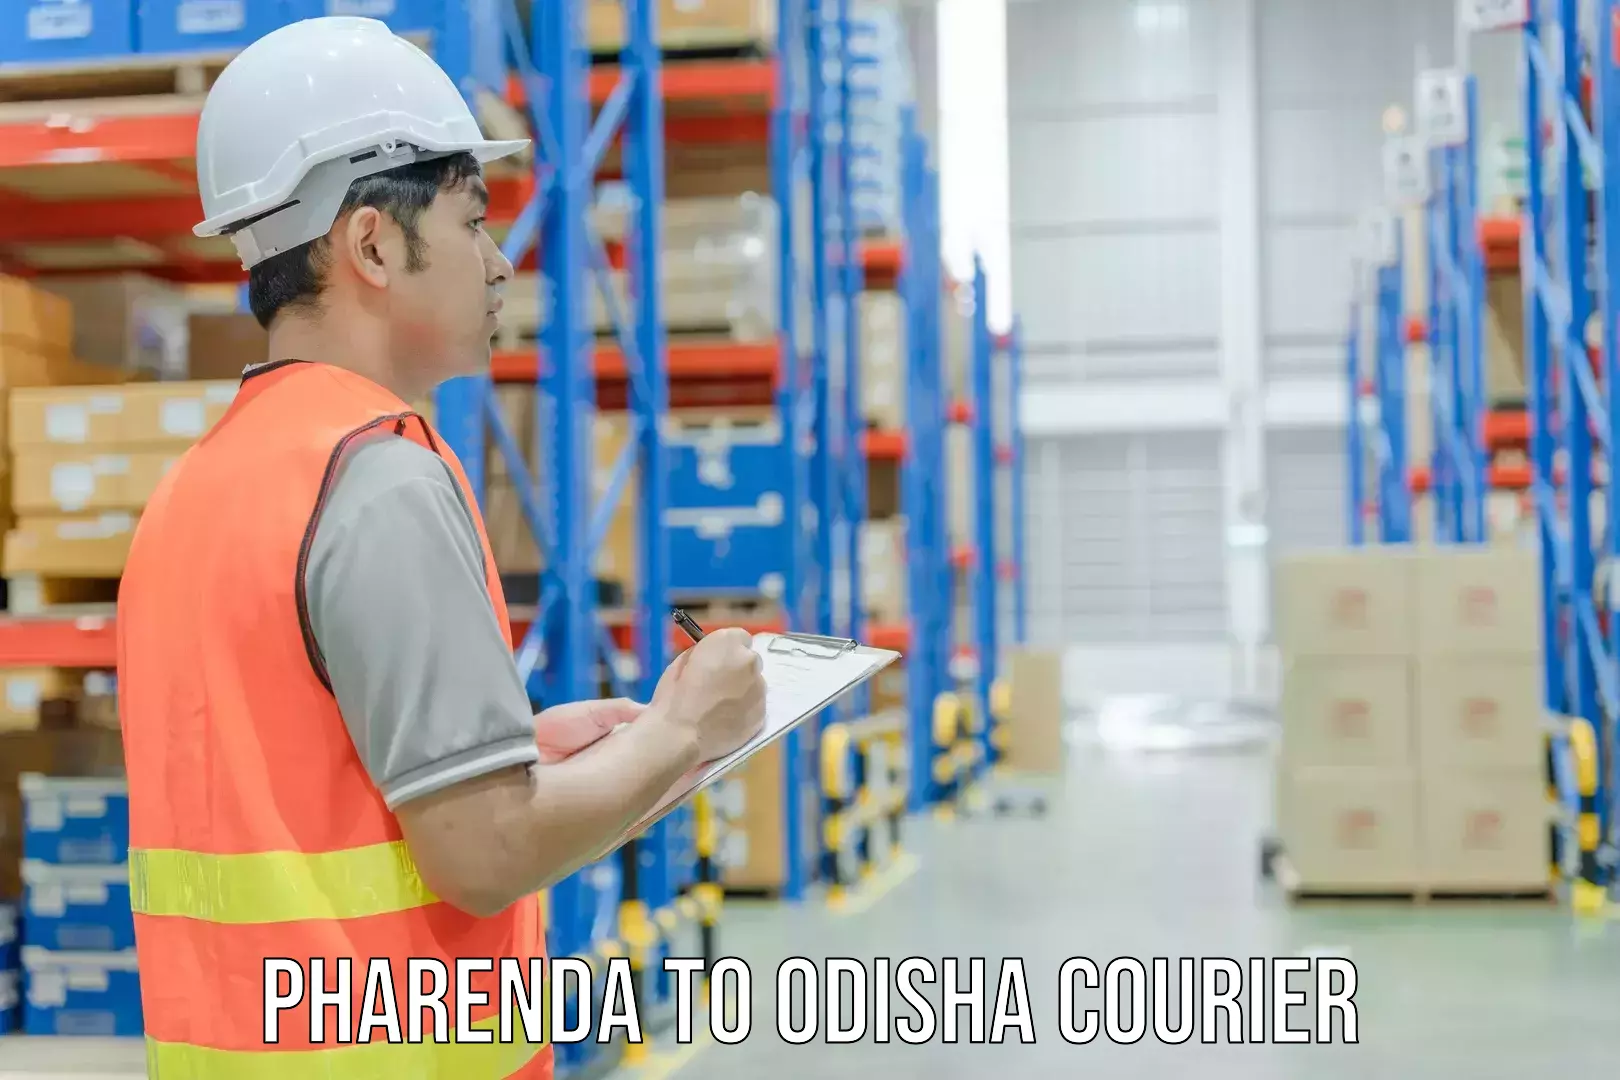 Professional courier handling Pharenda to Odisha